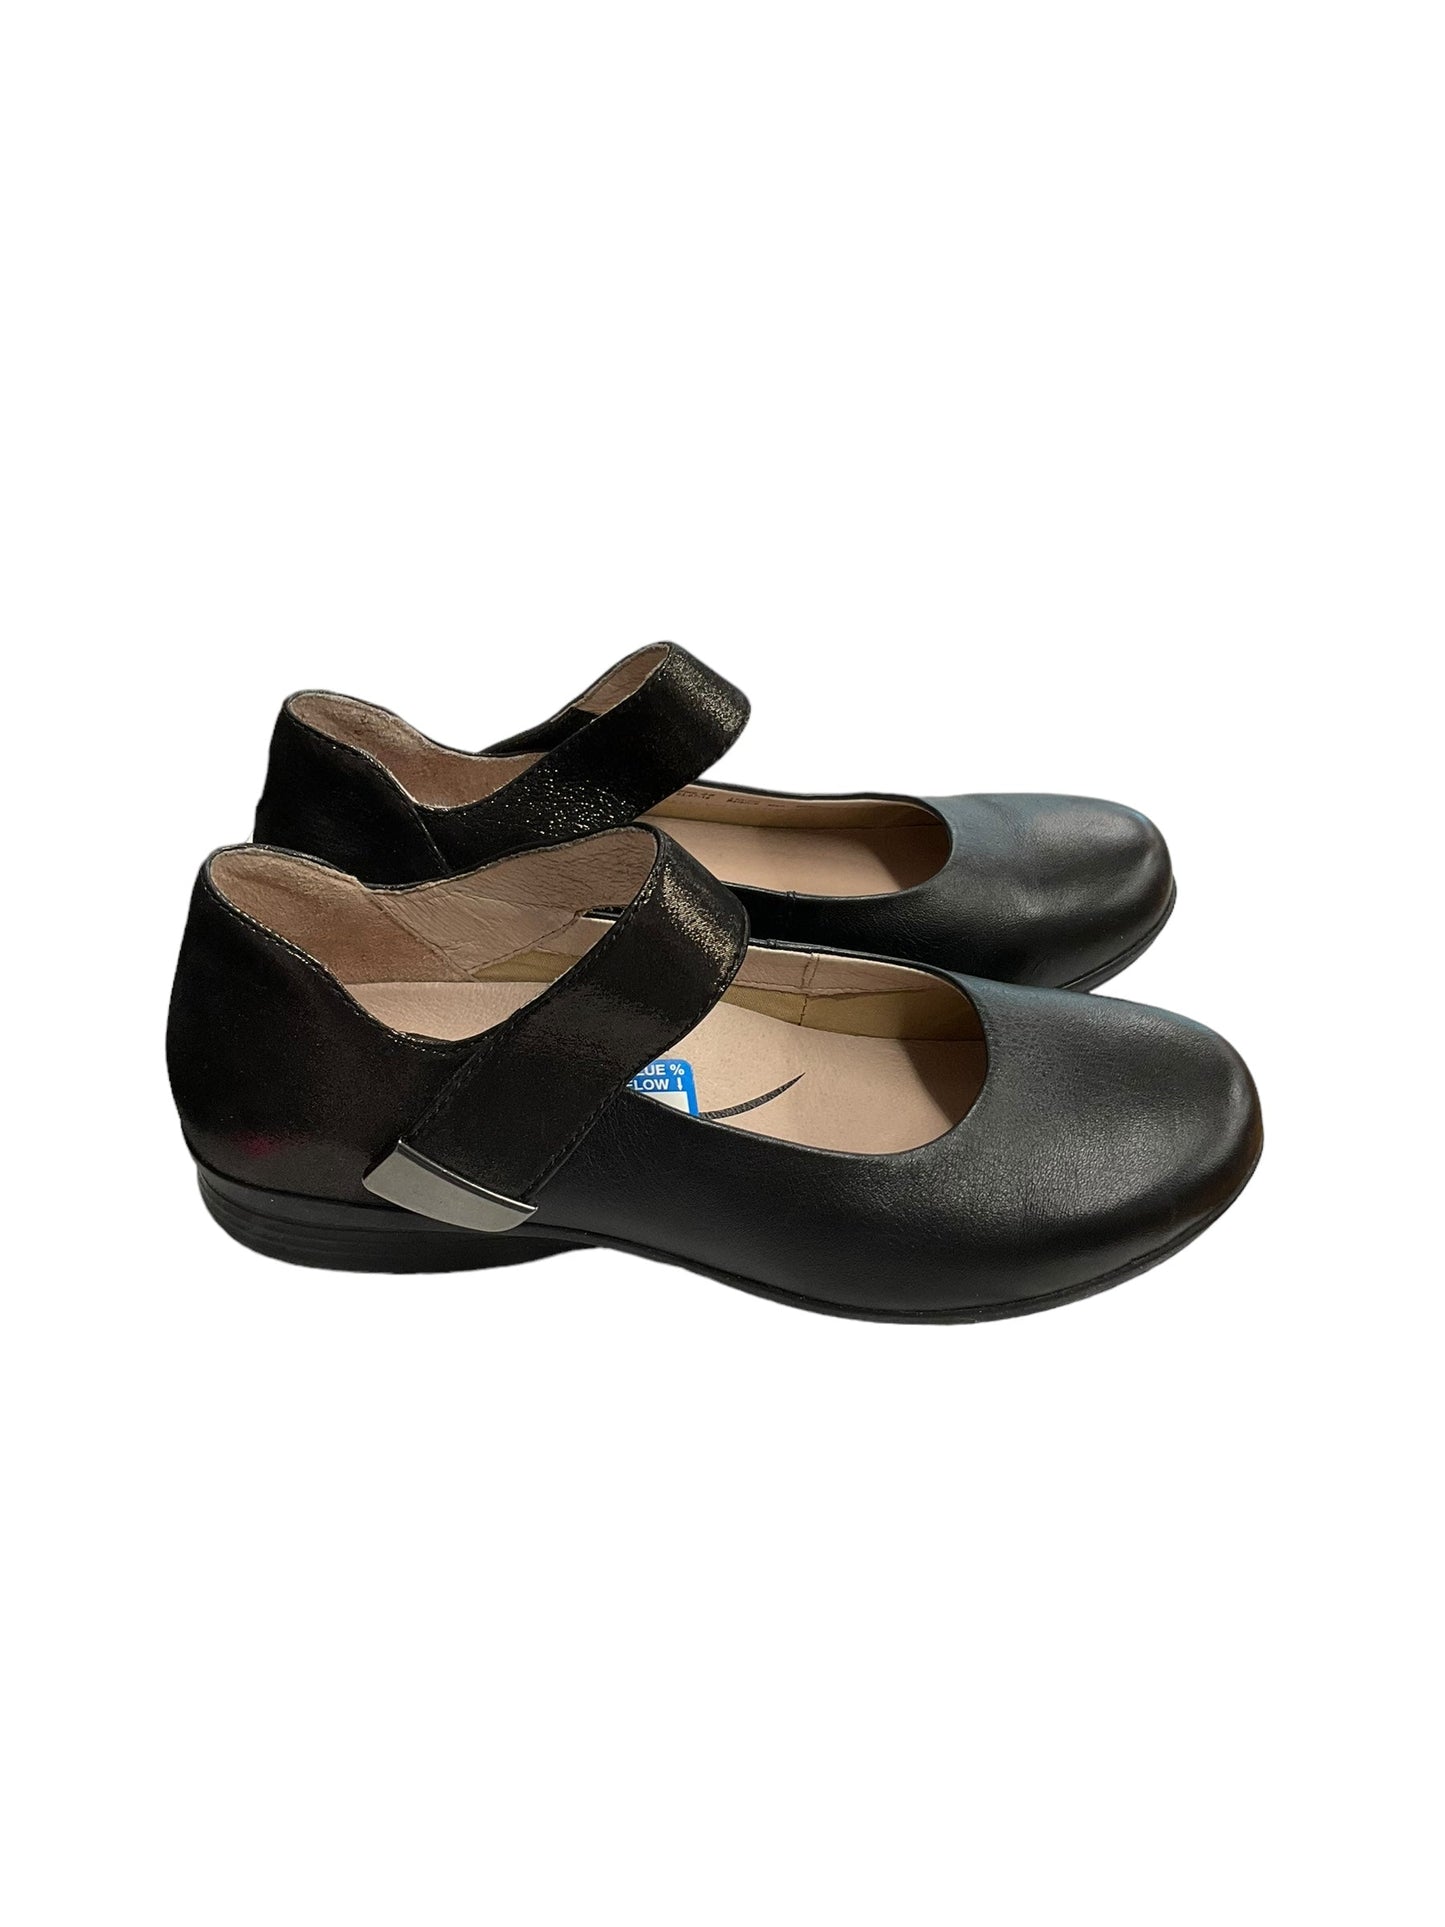 Black Shoes Flats Dansko, Size 7.5